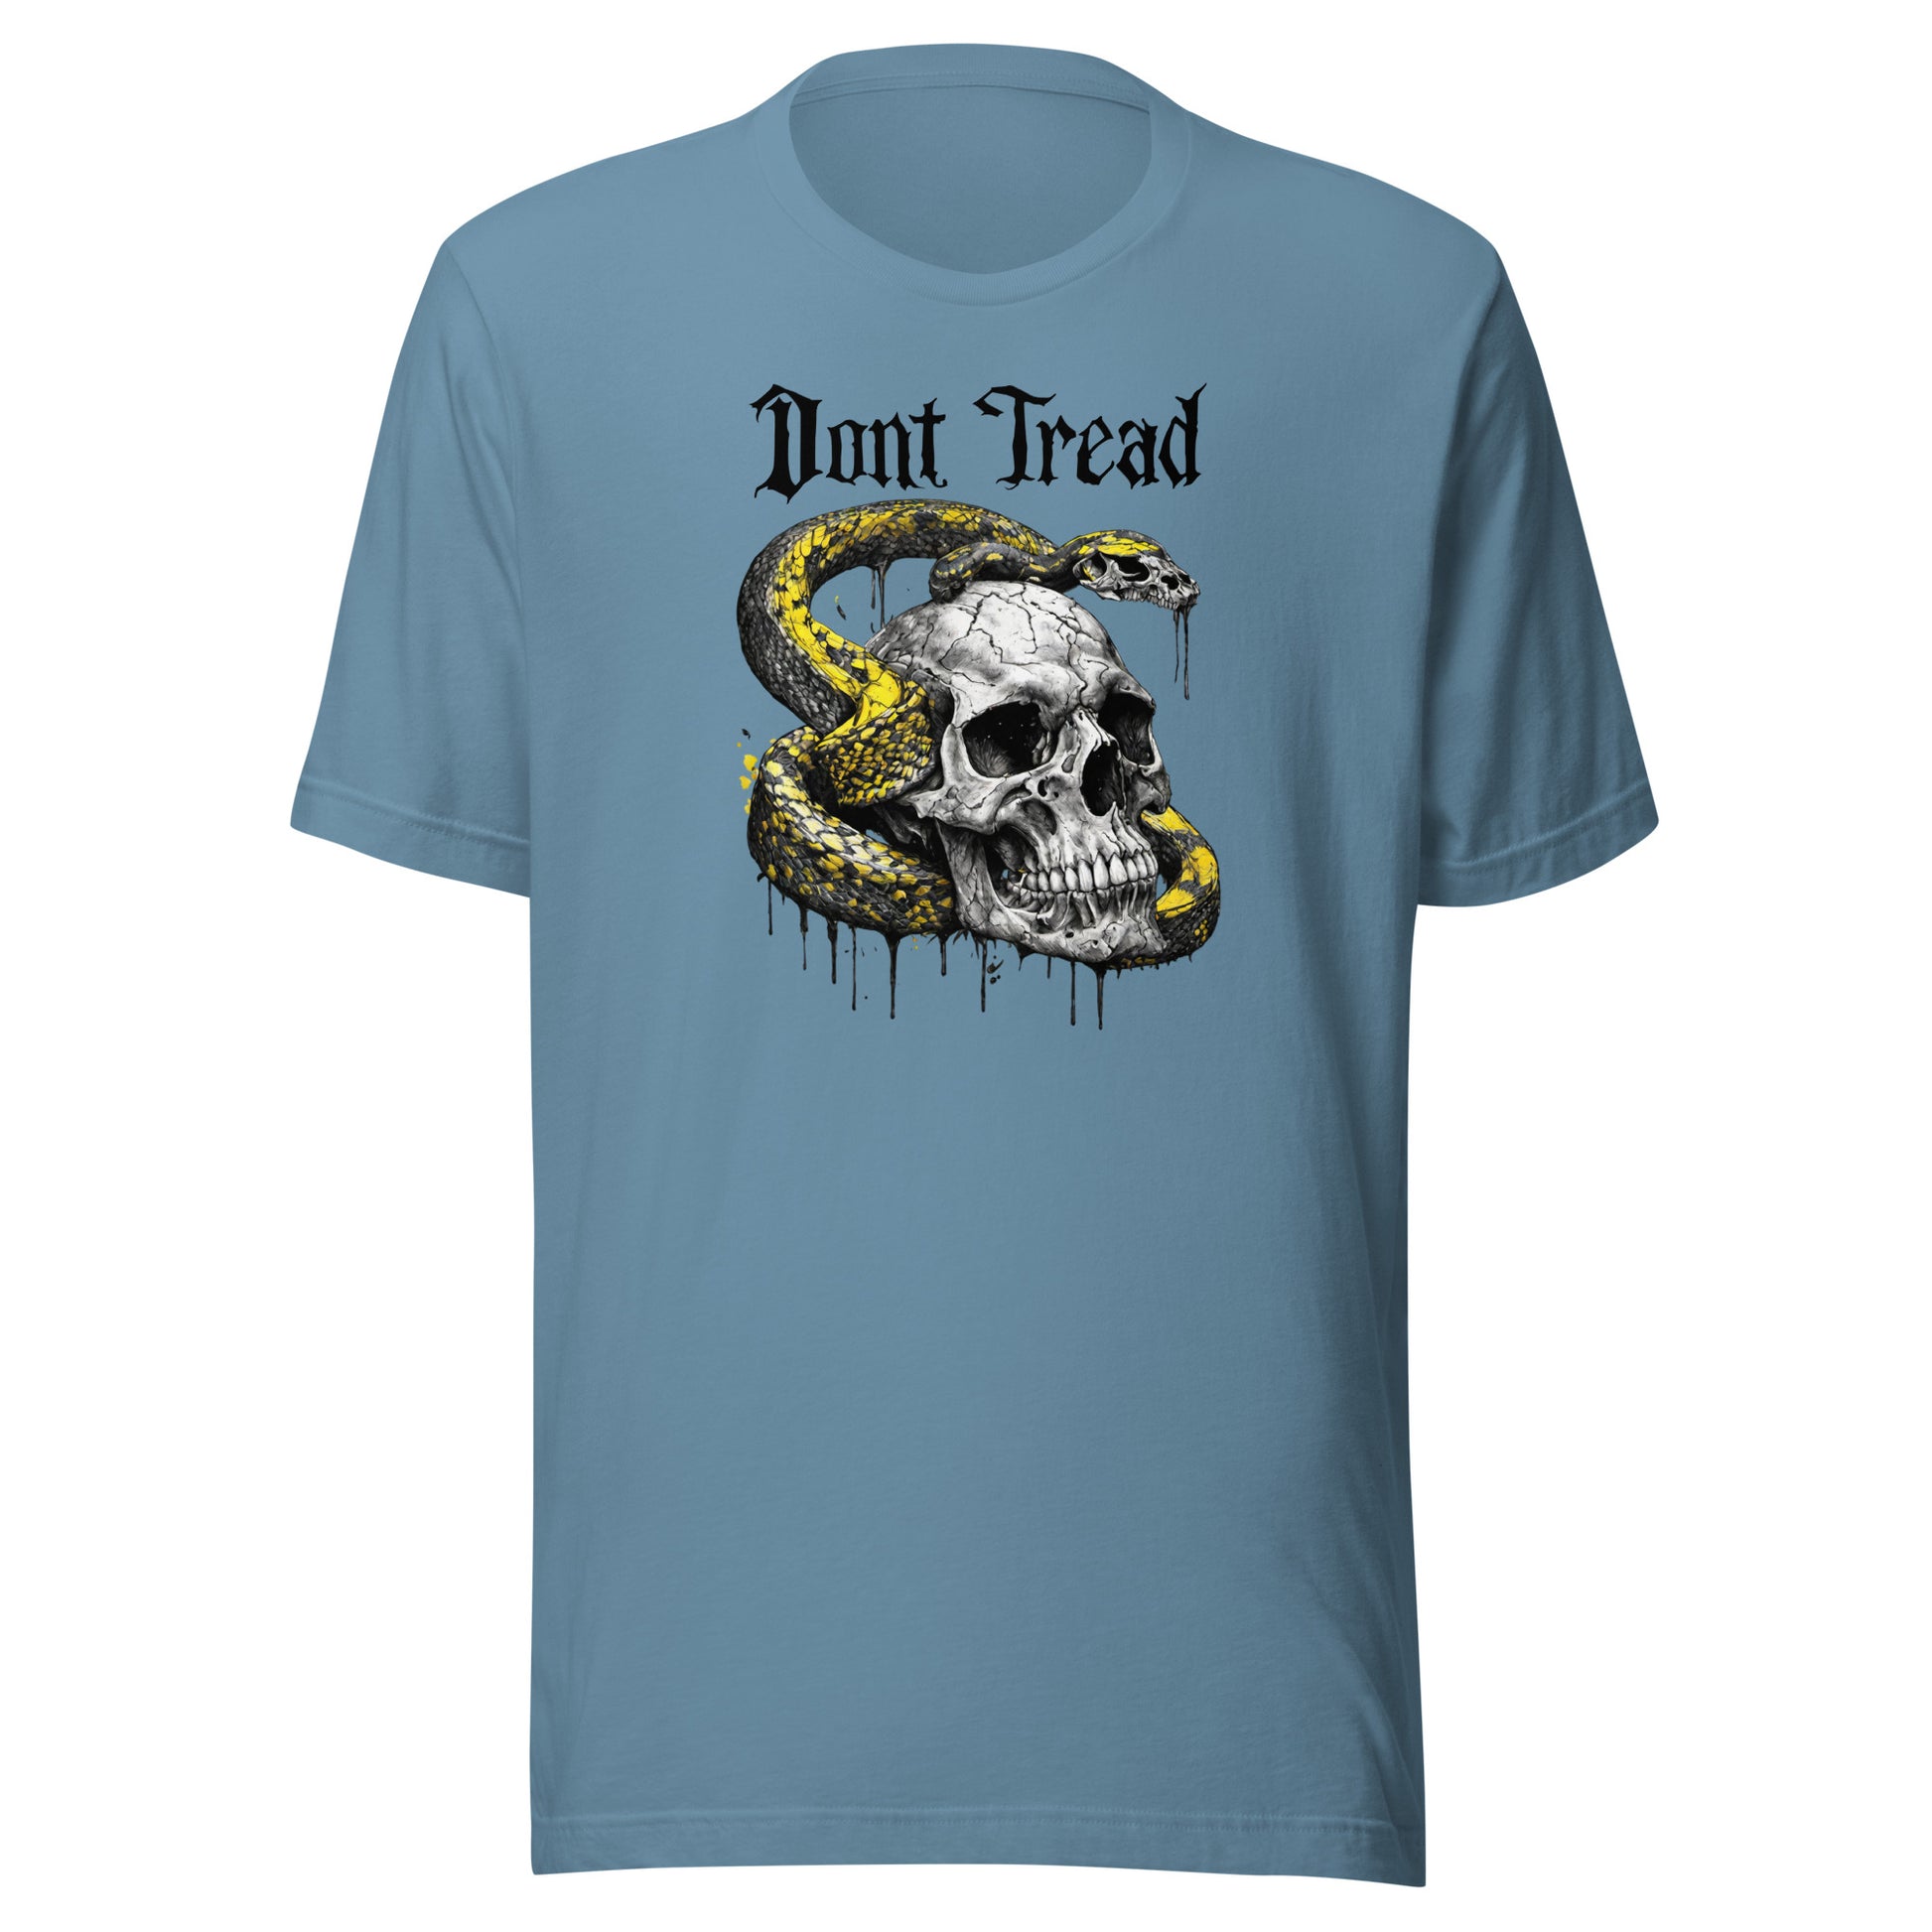 Don't Tread Snake & Skull 2nd Amendment Men's T-Shirt Steel Blue